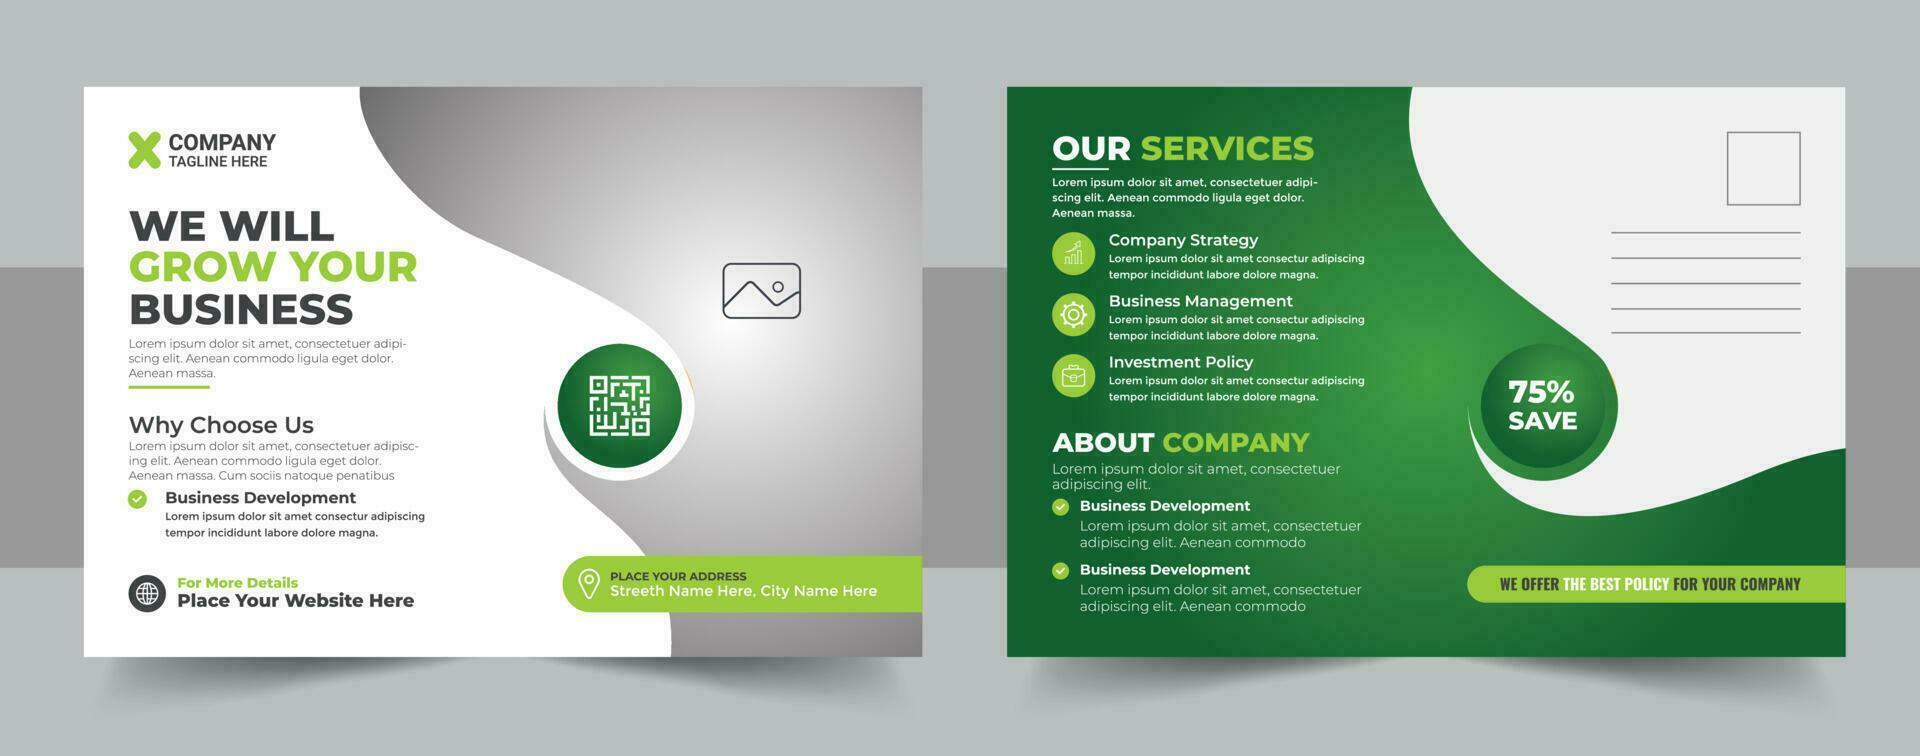 Corporate postcard design template, amazing and modern postcard design, stylish corporate postcard design vector